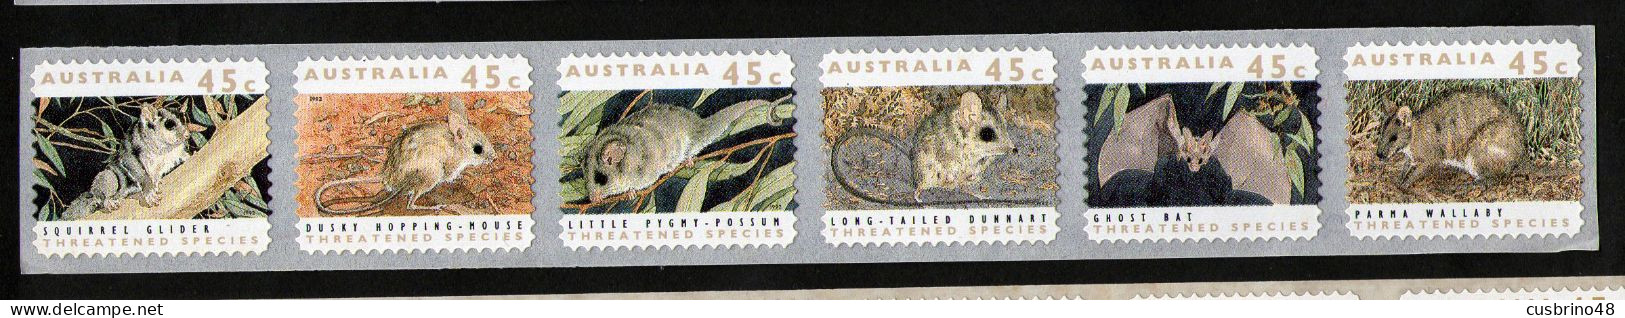 AUSTRALIA 1992 P&S Strip 6 45c Endangered Species PEMARA 4 Koala Reprint. - Lot AUS 265 - Nuovi